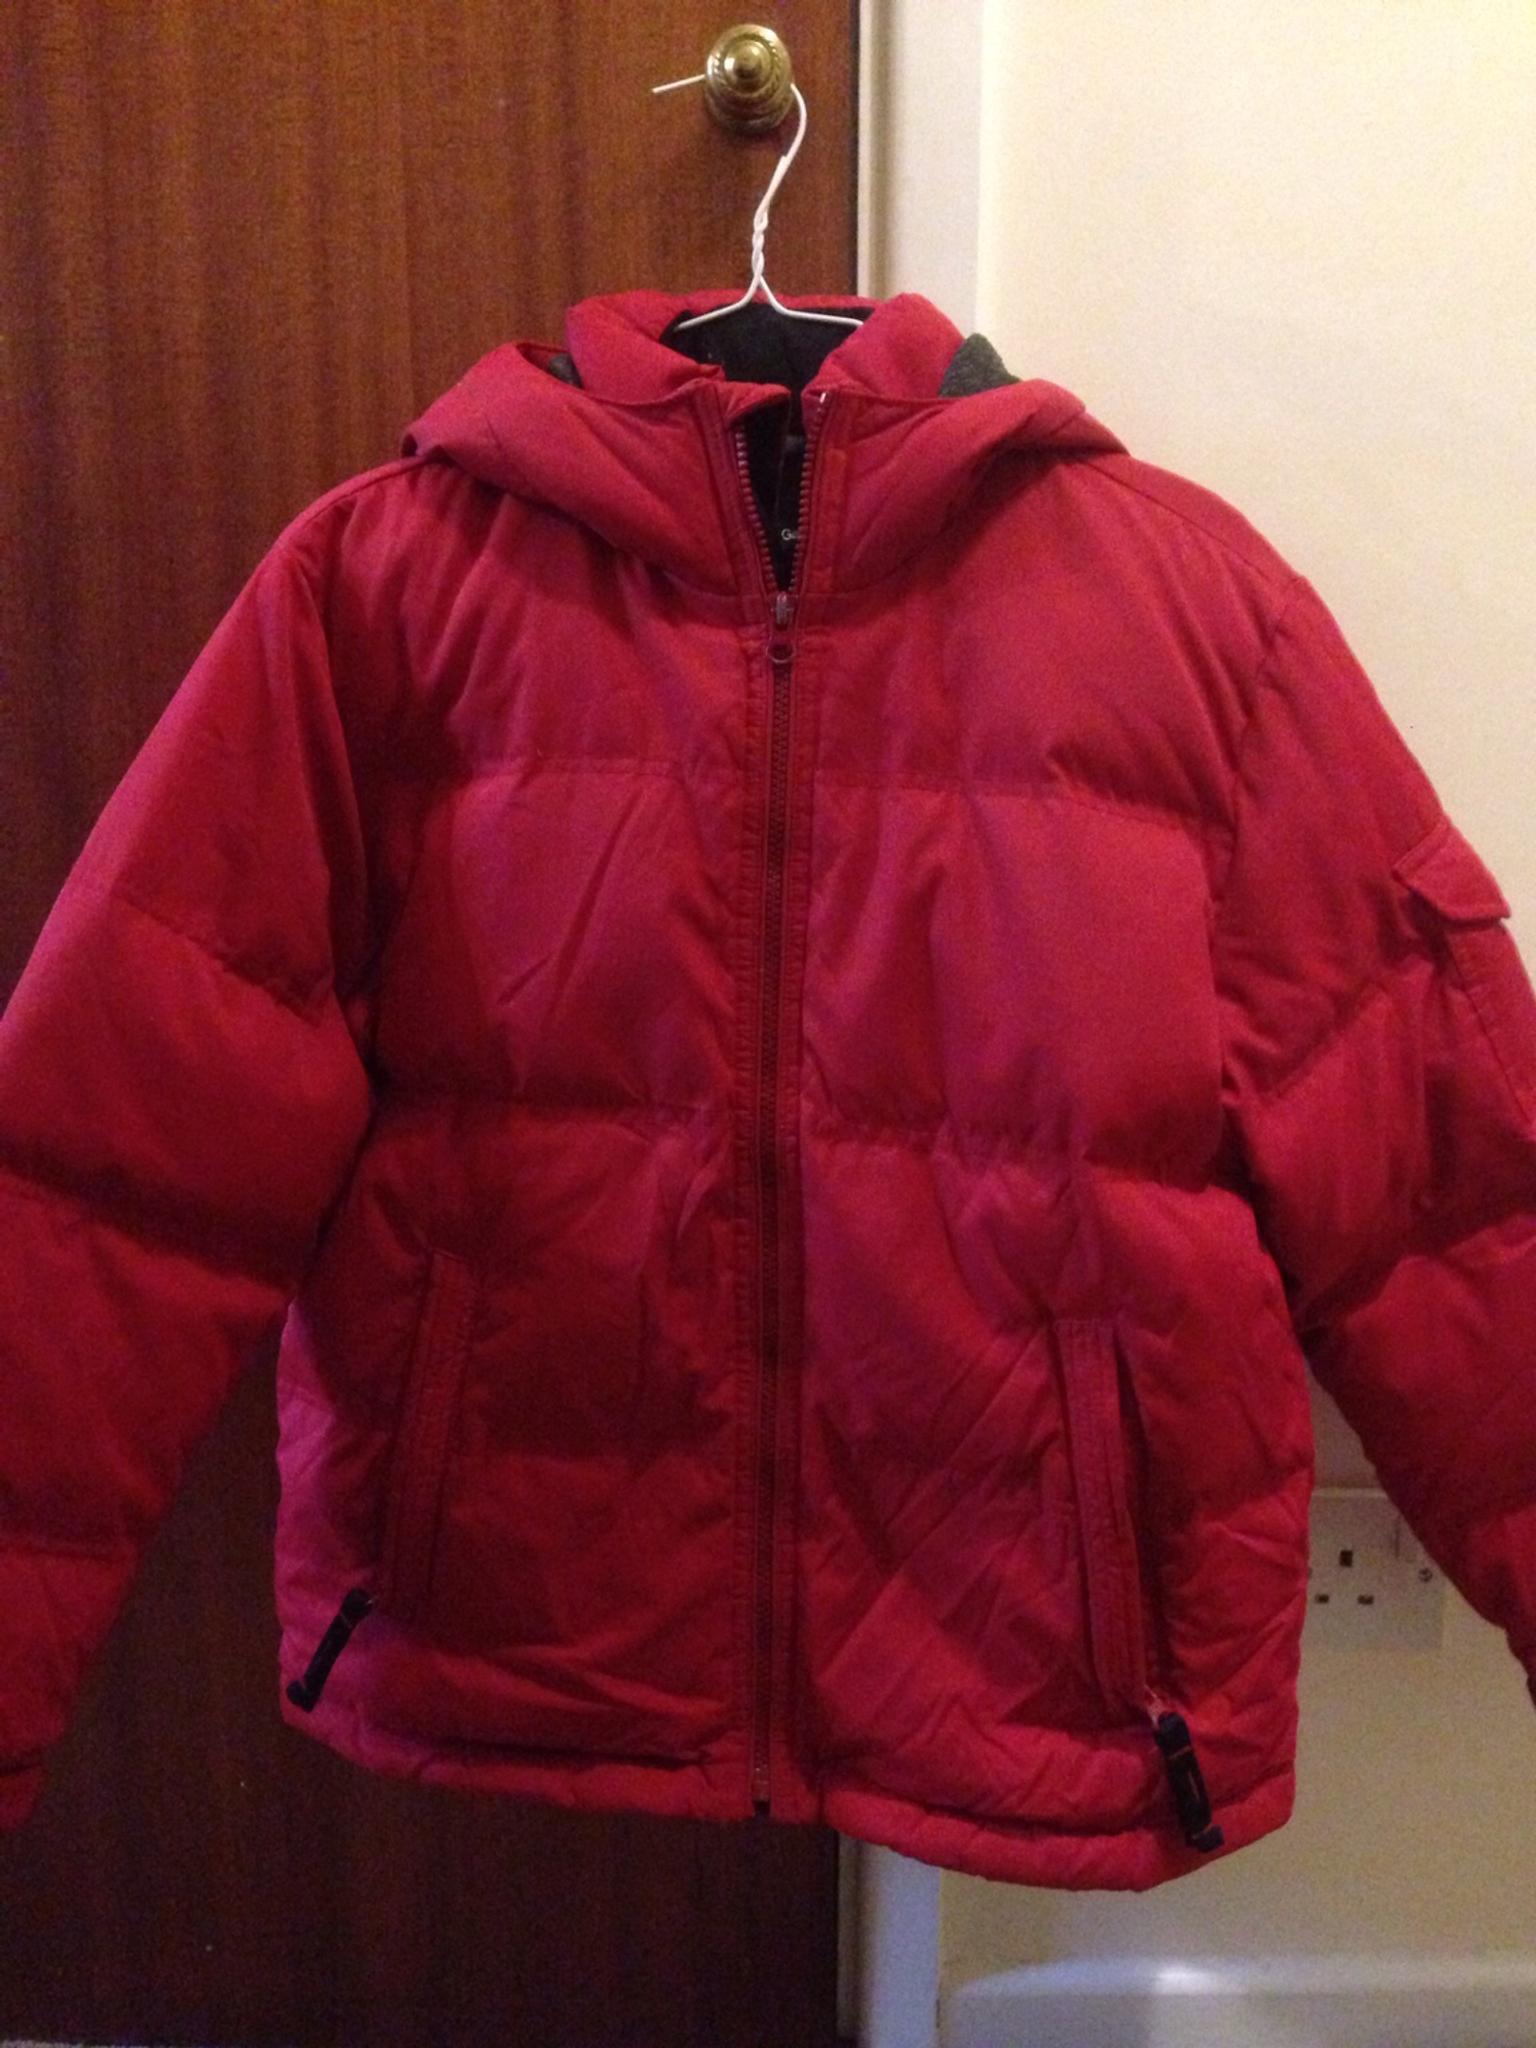 gap red puffer jacket